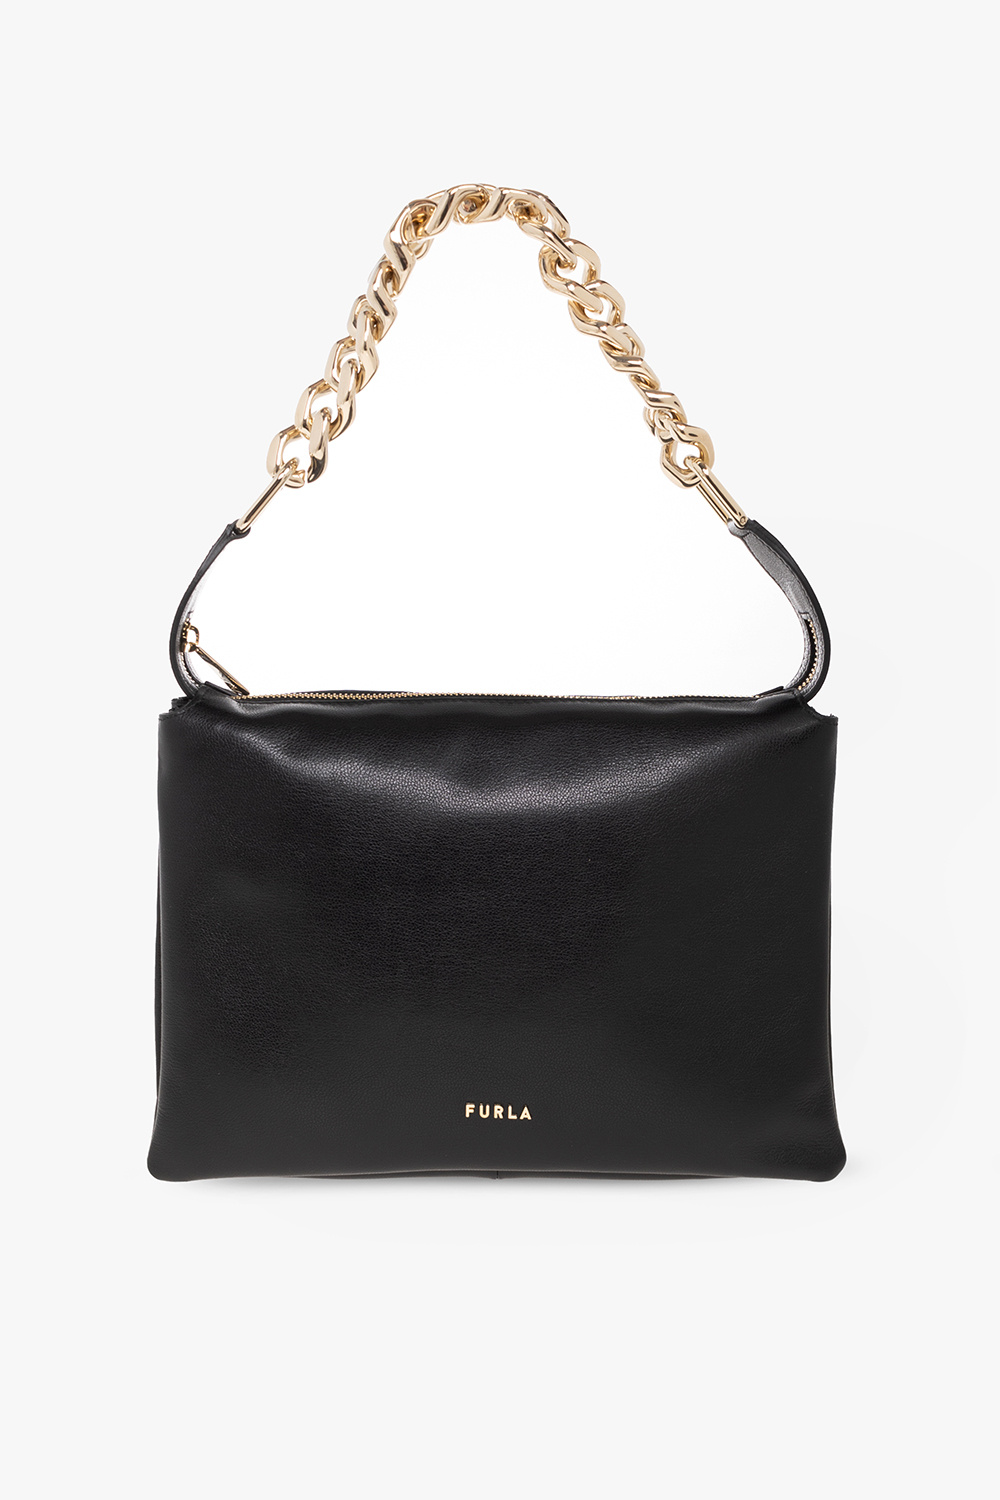 Furla ‘Piuma Small’ shoulder StndUp bag